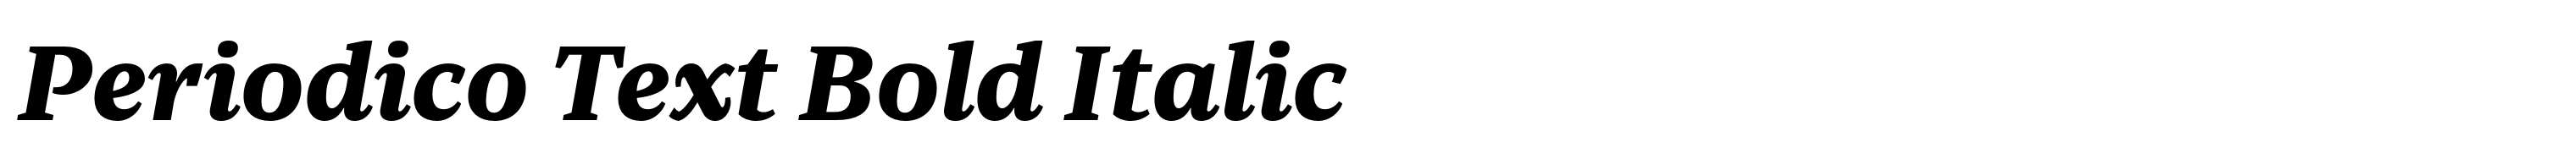 Periodico Text Bold Italic